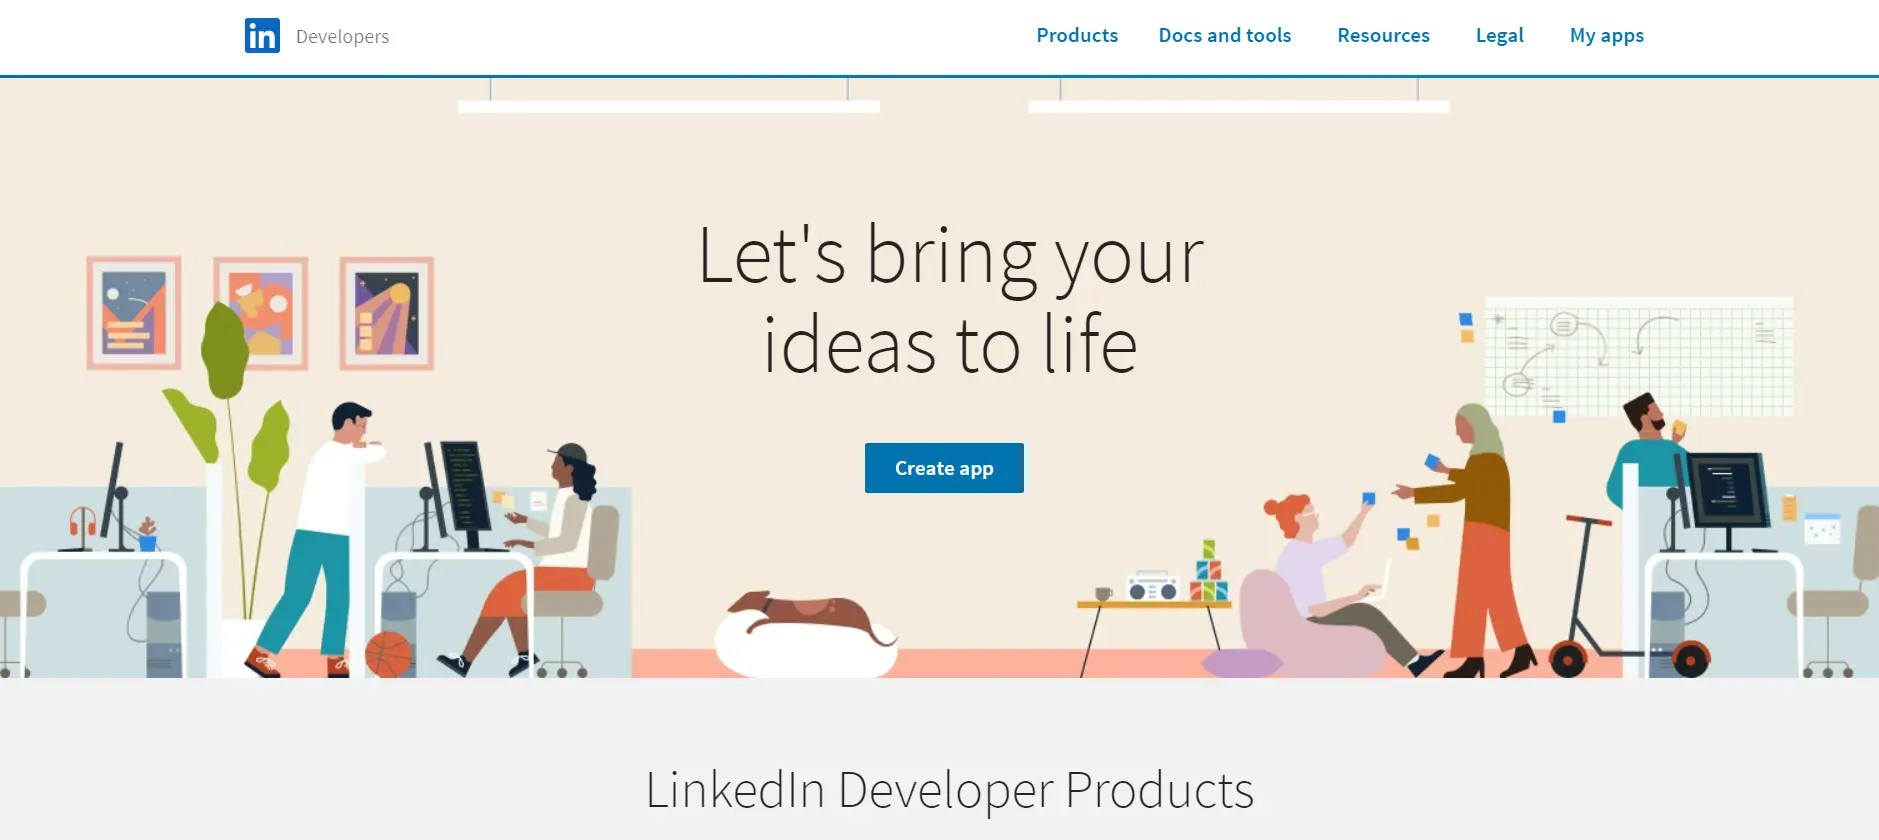 DjangoSSO LinkedIn: Create-application